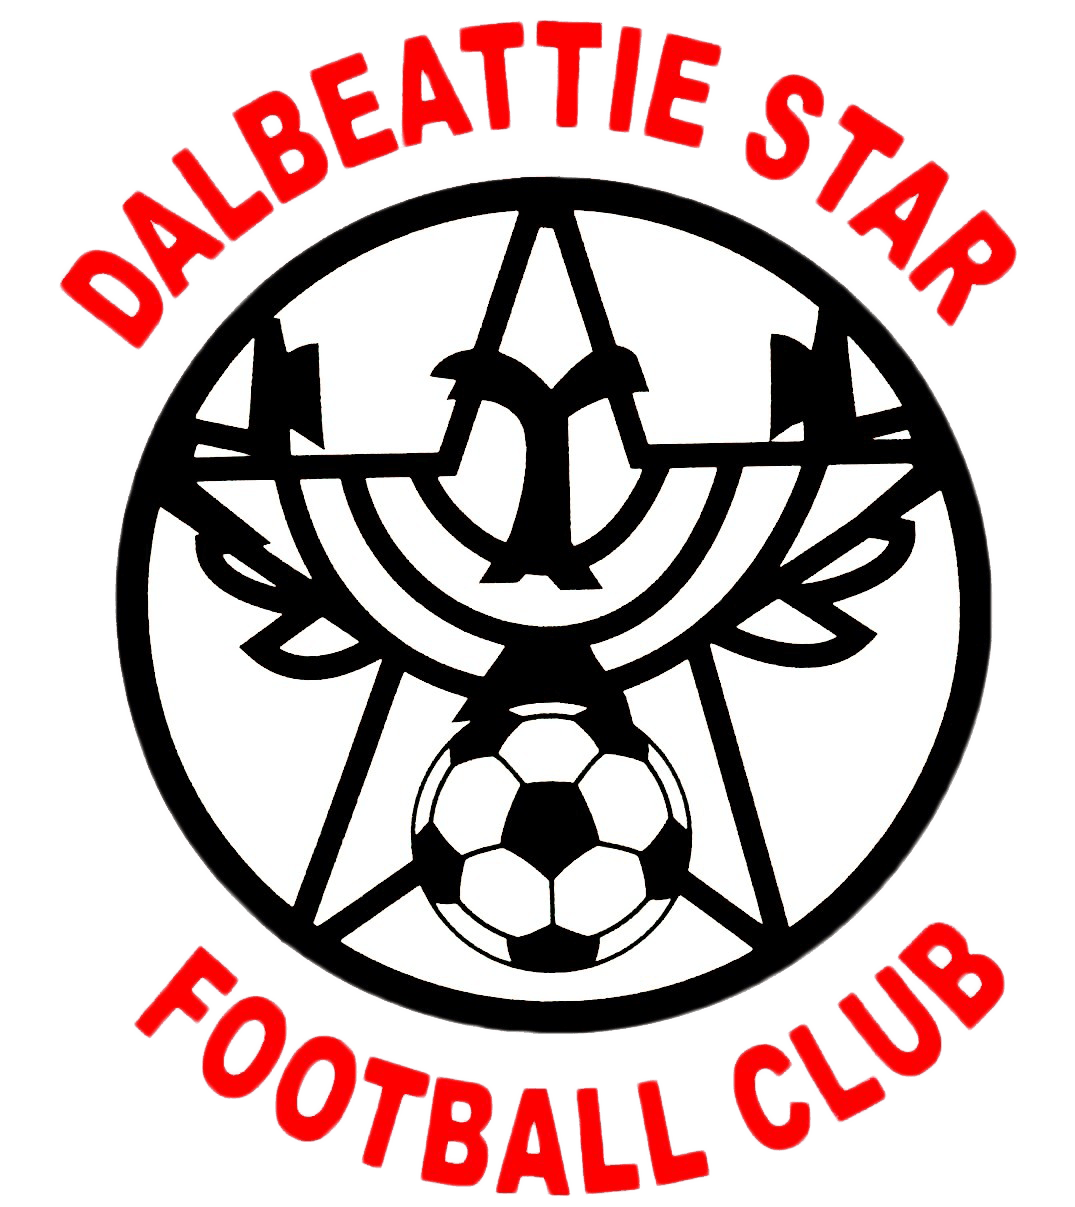 Ritchie Maxwell, Manager, Dalbeattie Star FC